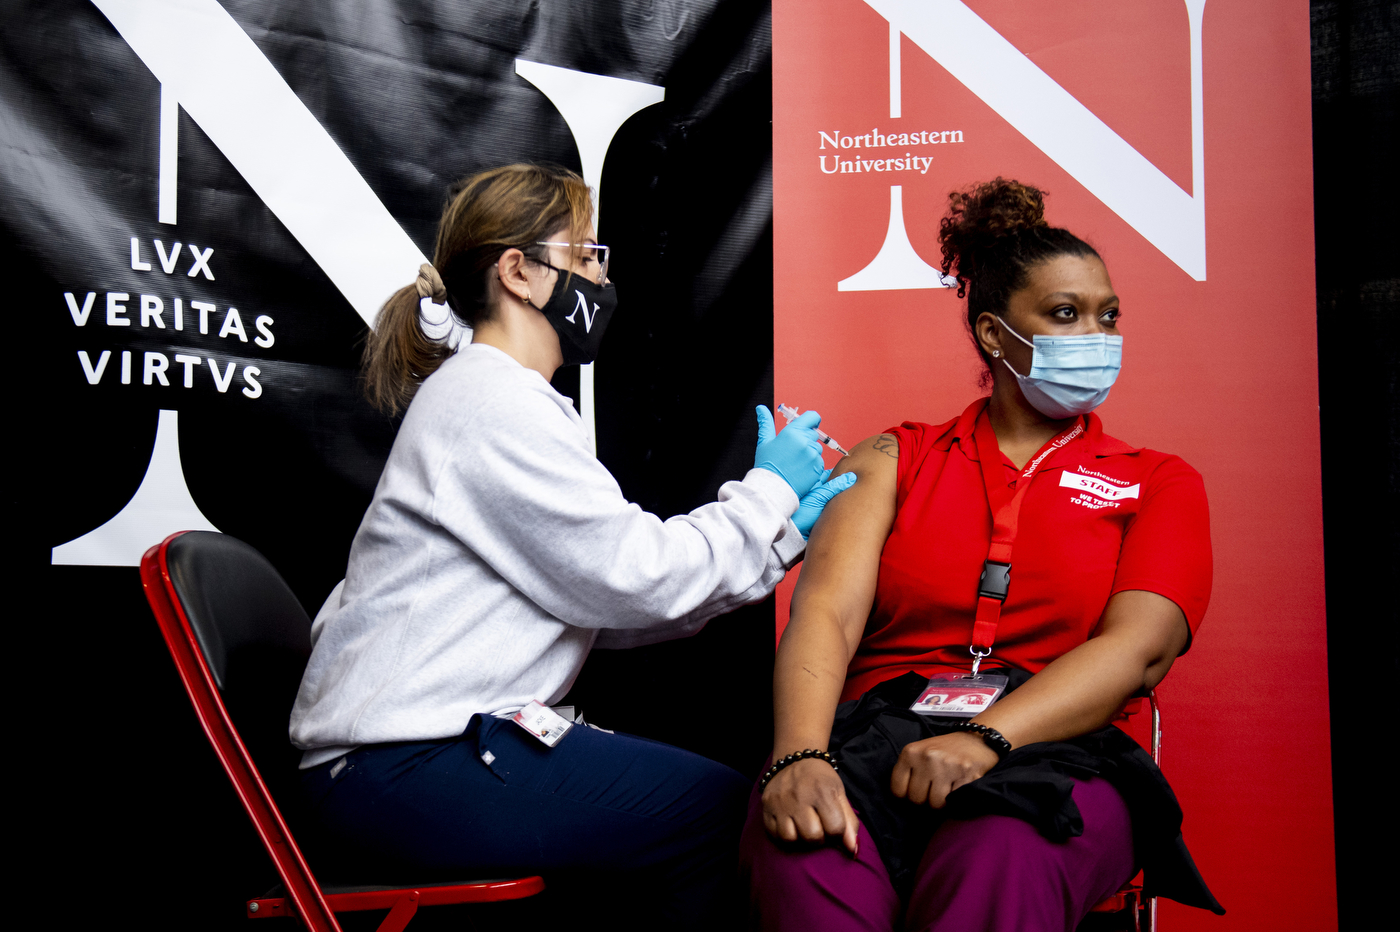 Northeastern University starts COVID-19 vaccinations